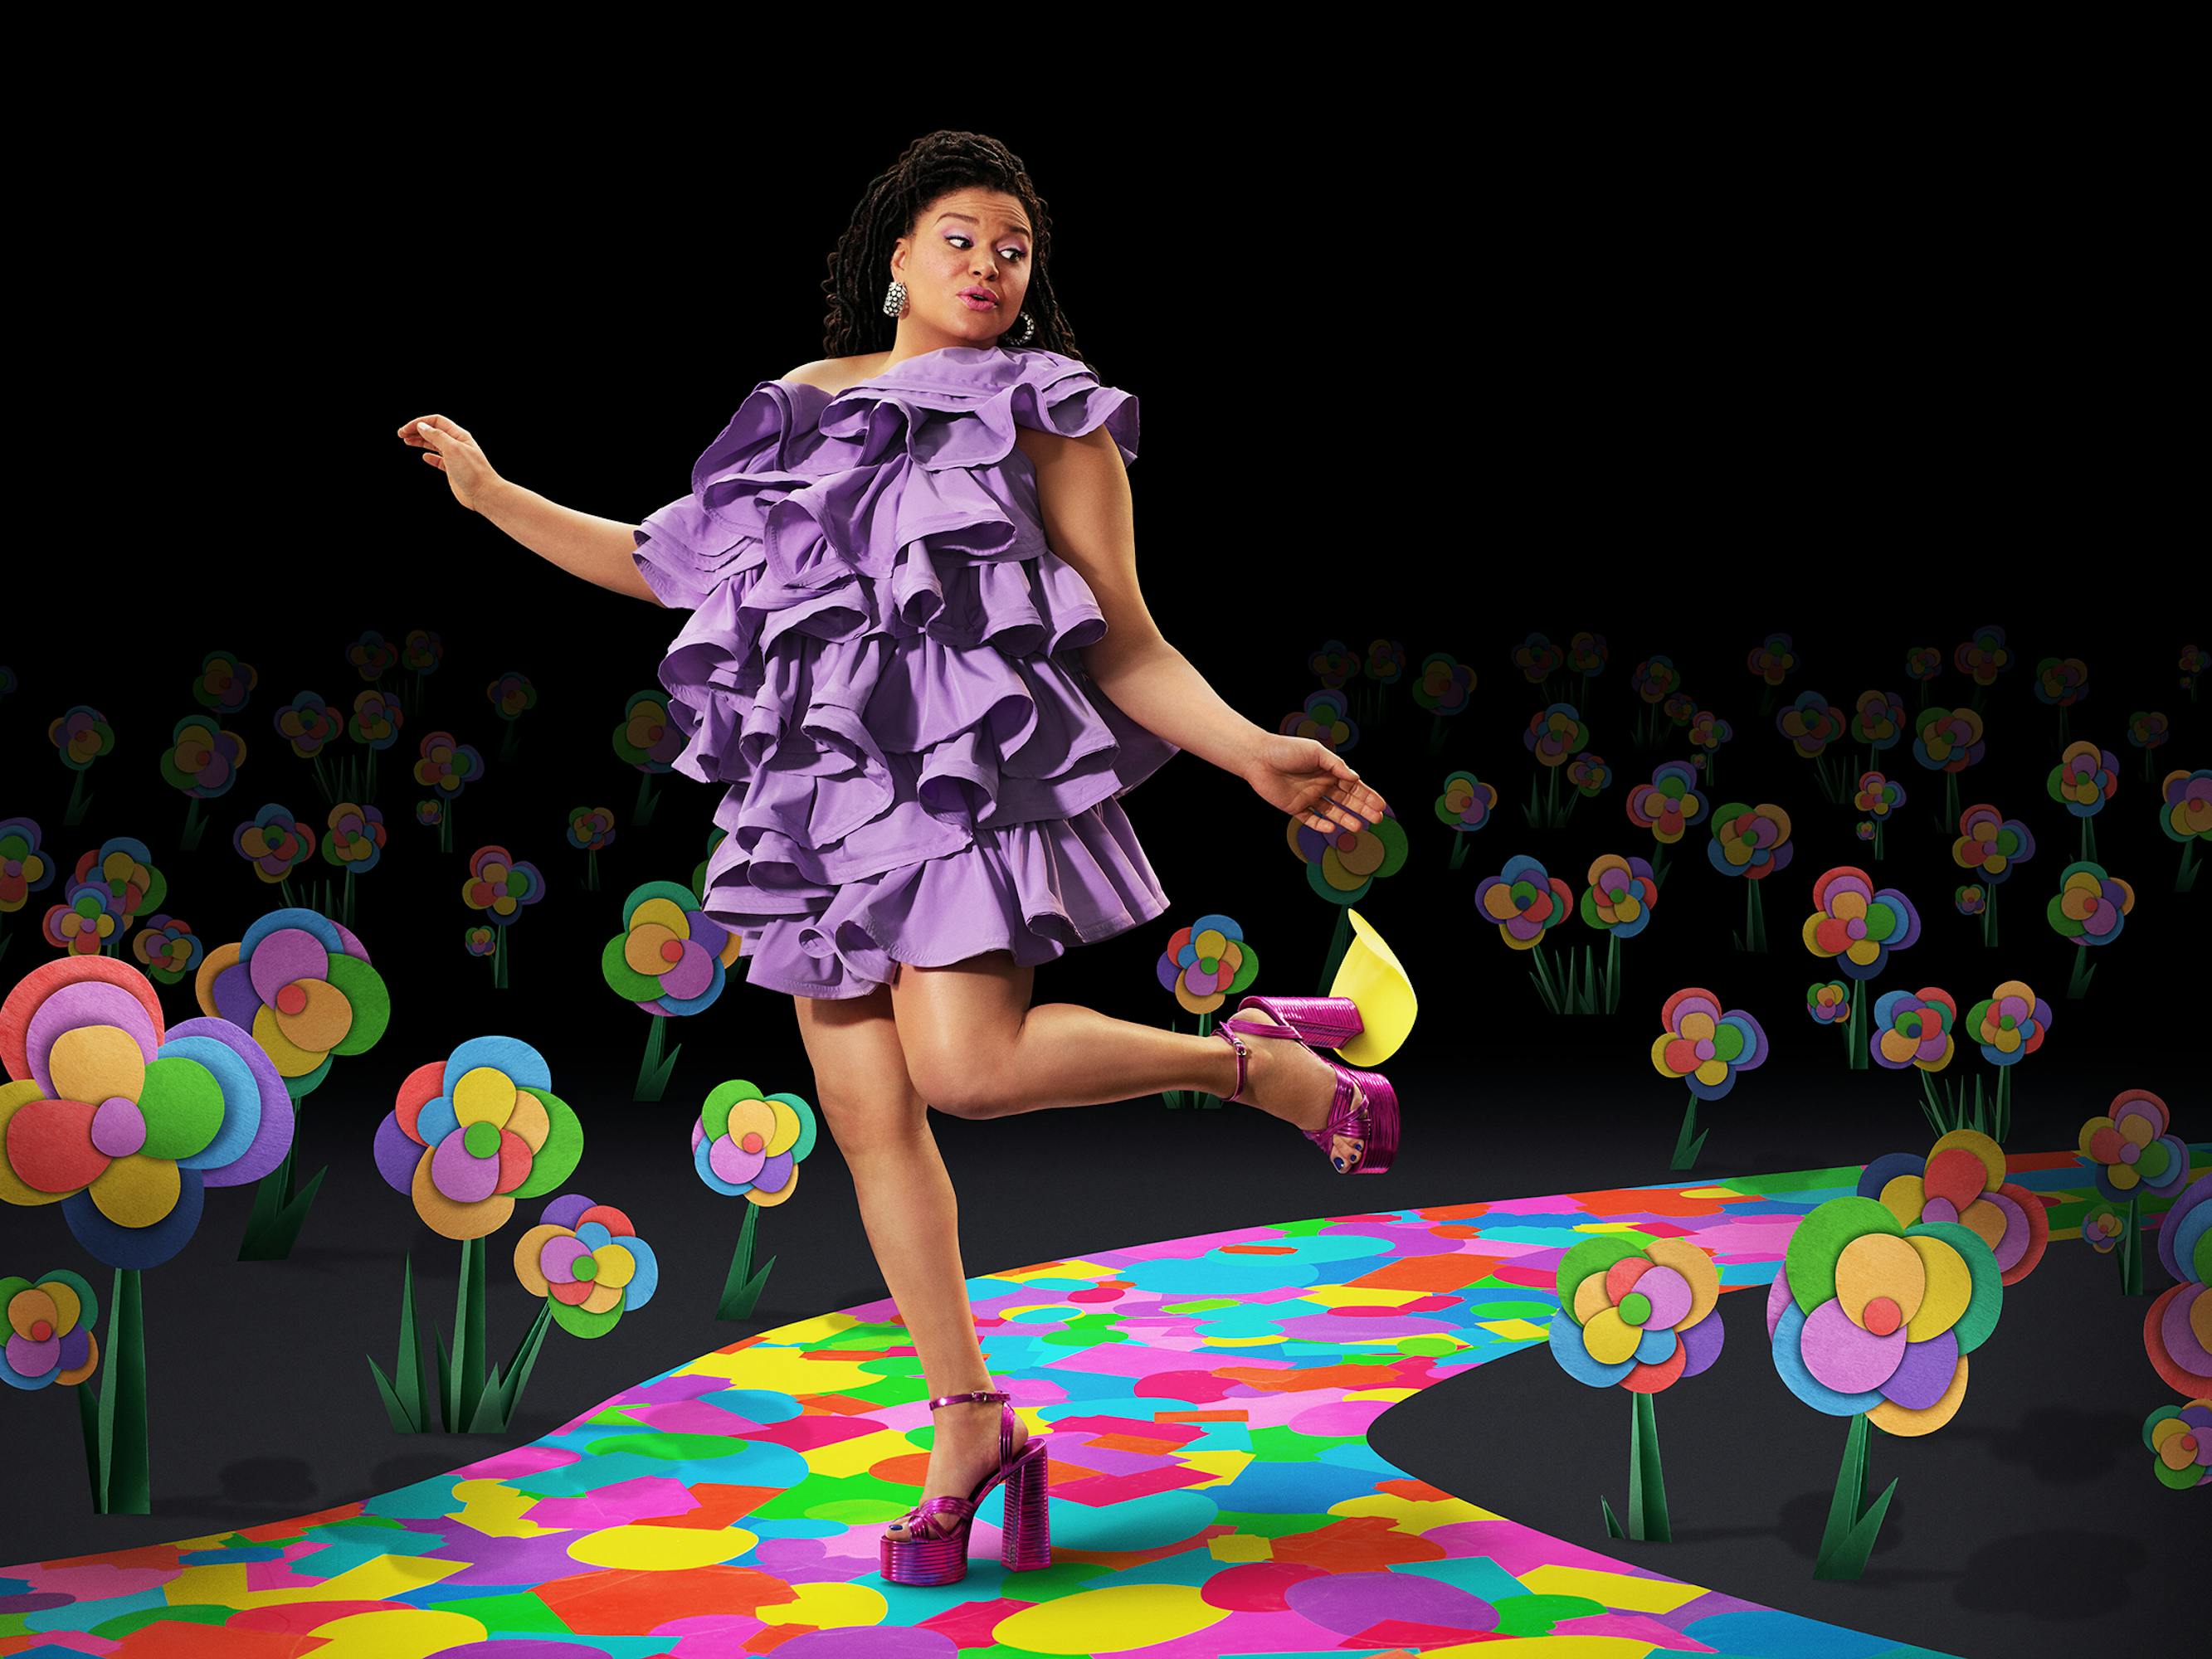 Michelle Buteau wears a ruffled purple dress and heels and walks on a sticker runway